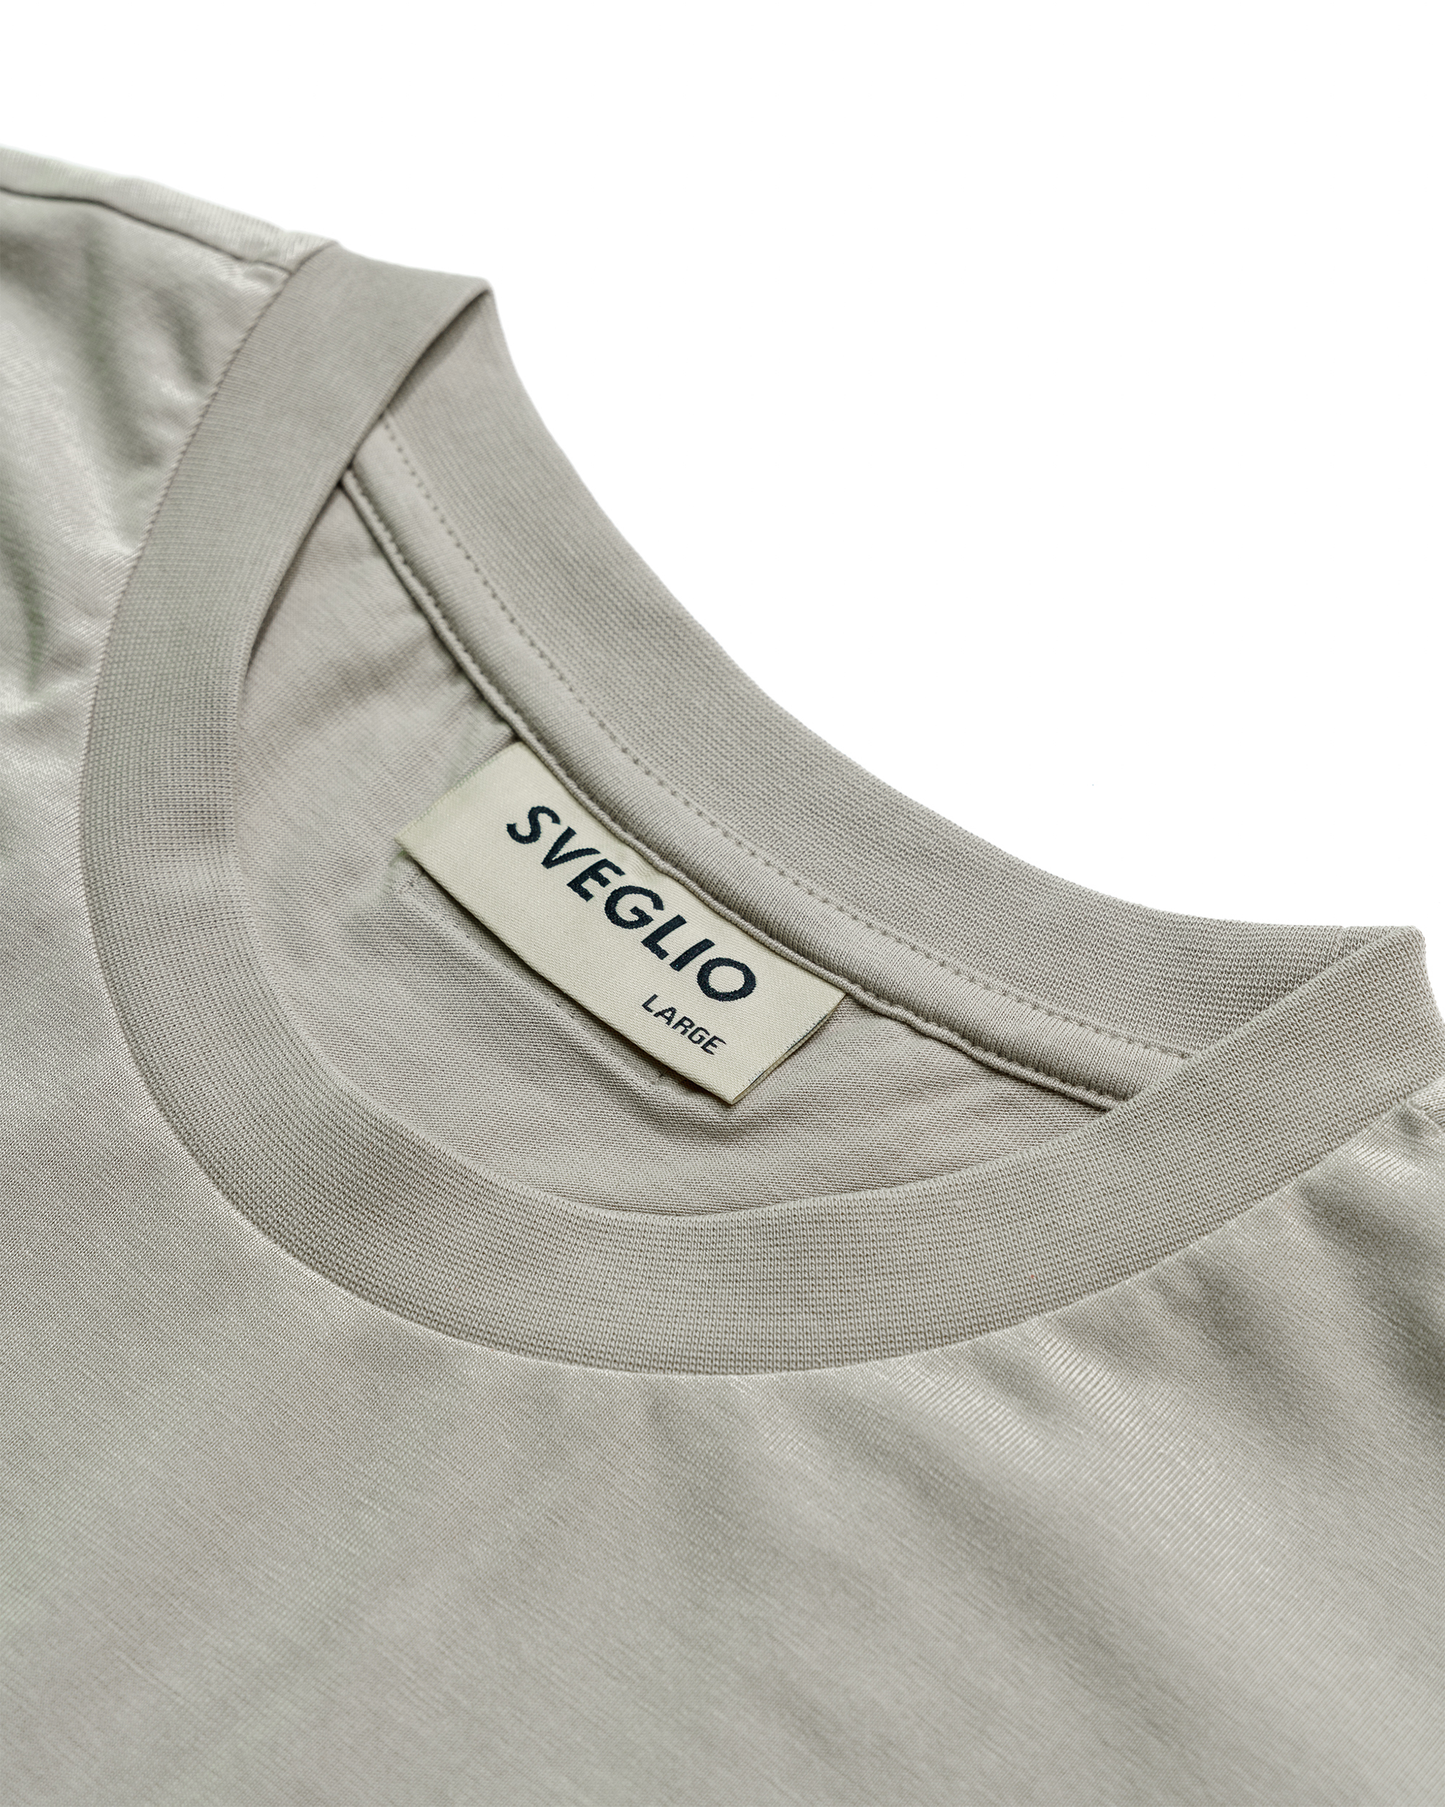 BURRARD BRIDGE t-shirt - Stone Grey